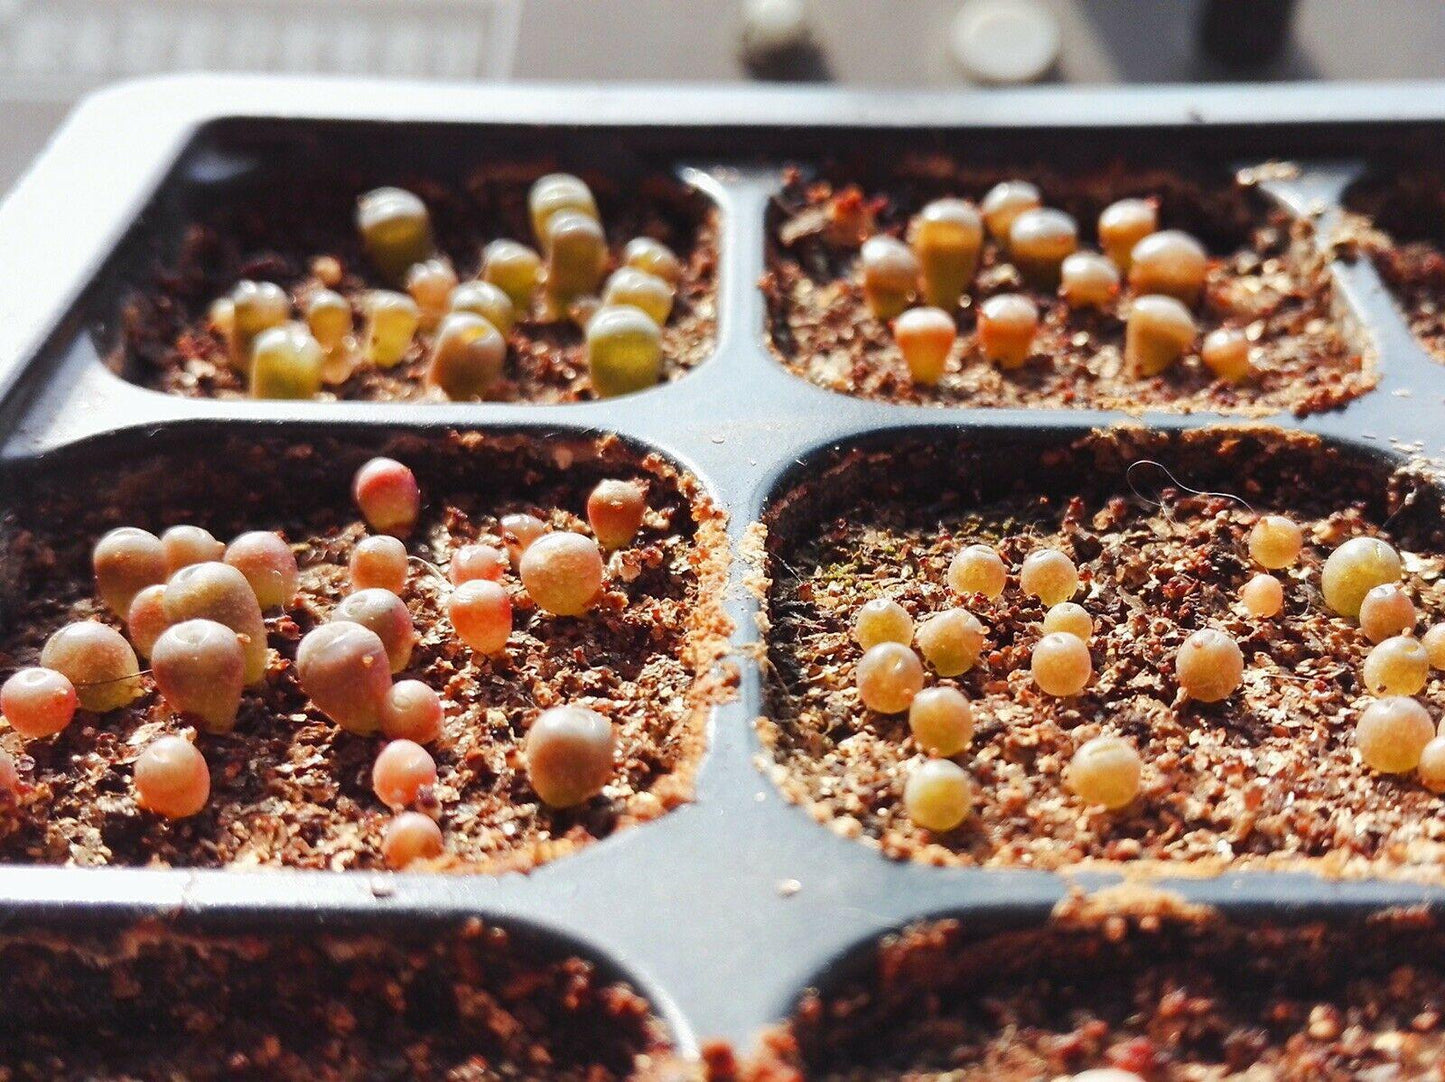 50 Lithops Seeds - Mix